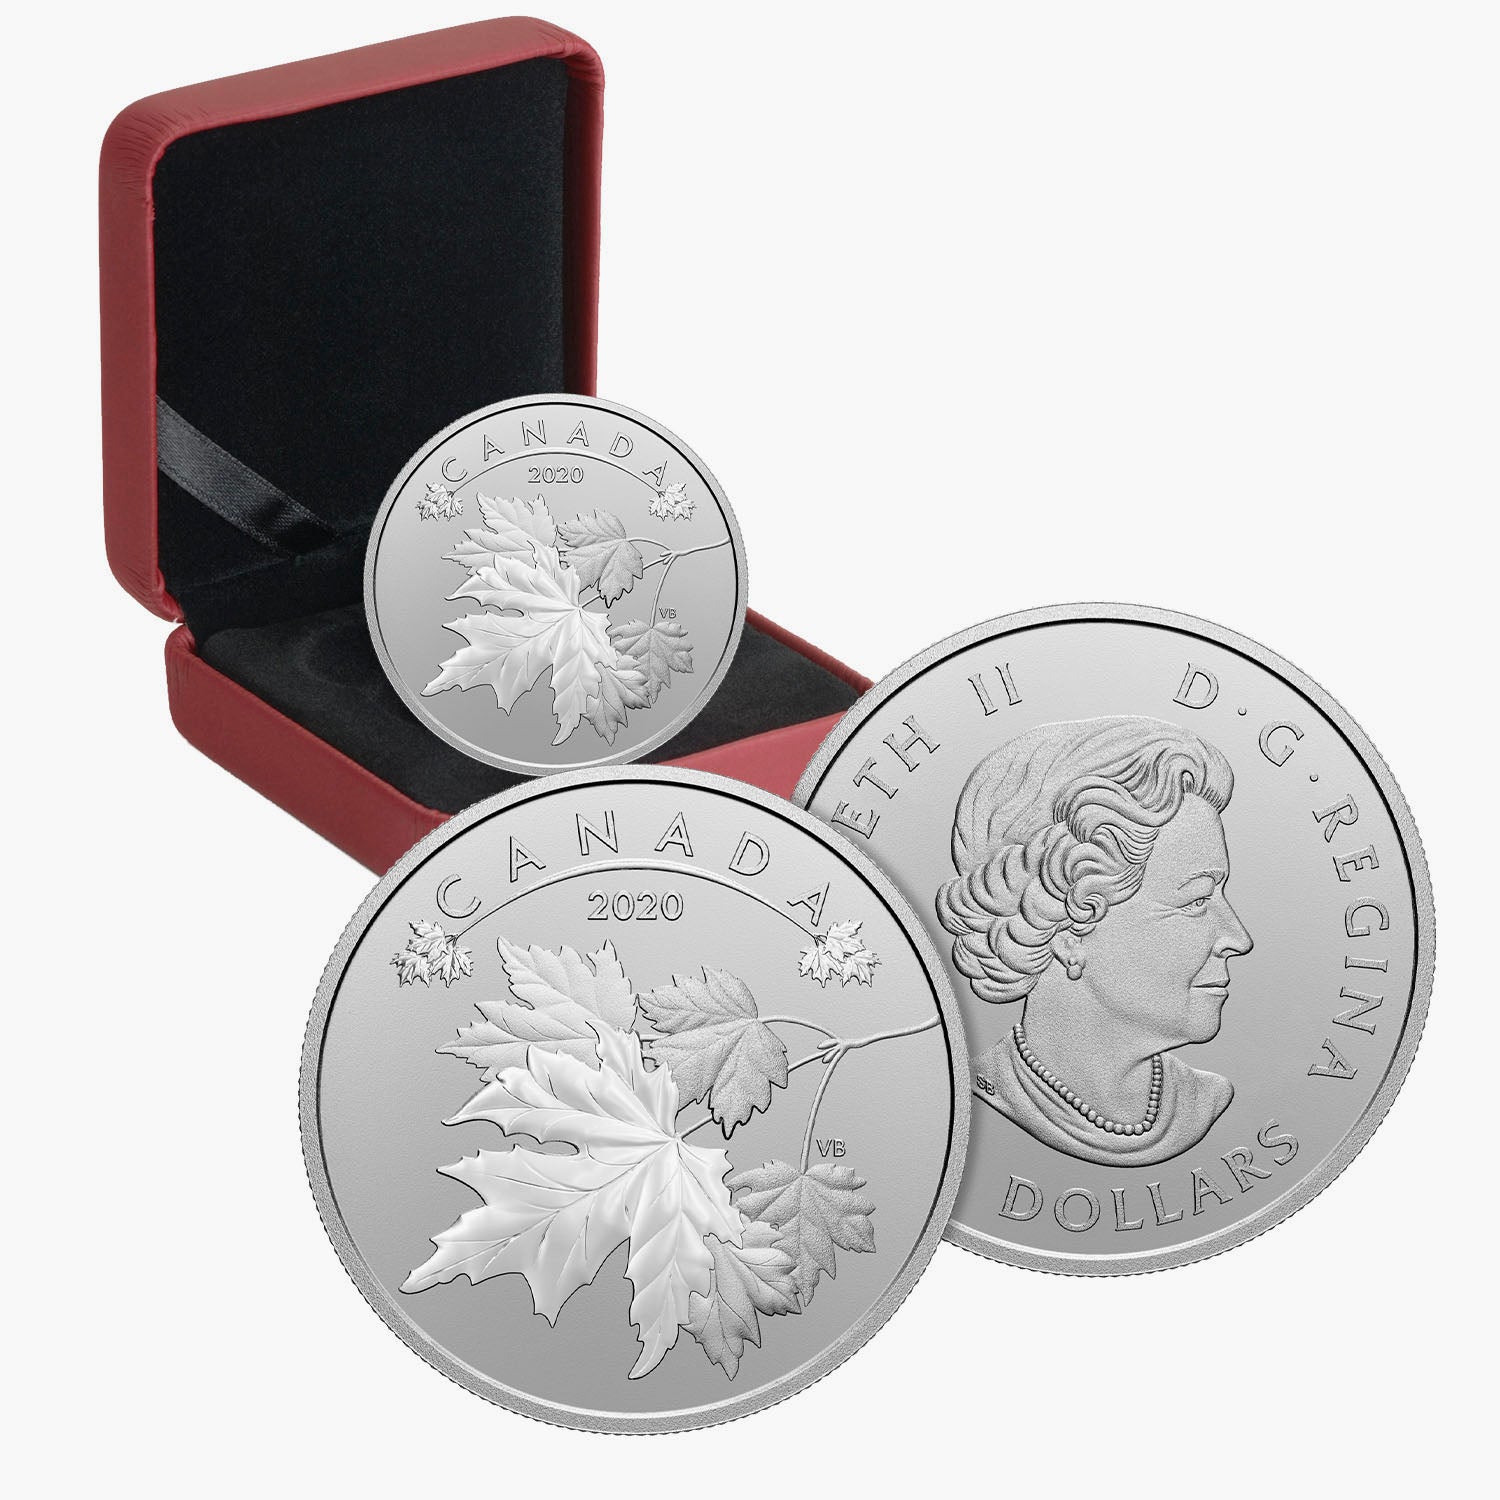 O Canada Maple Leaves Coin